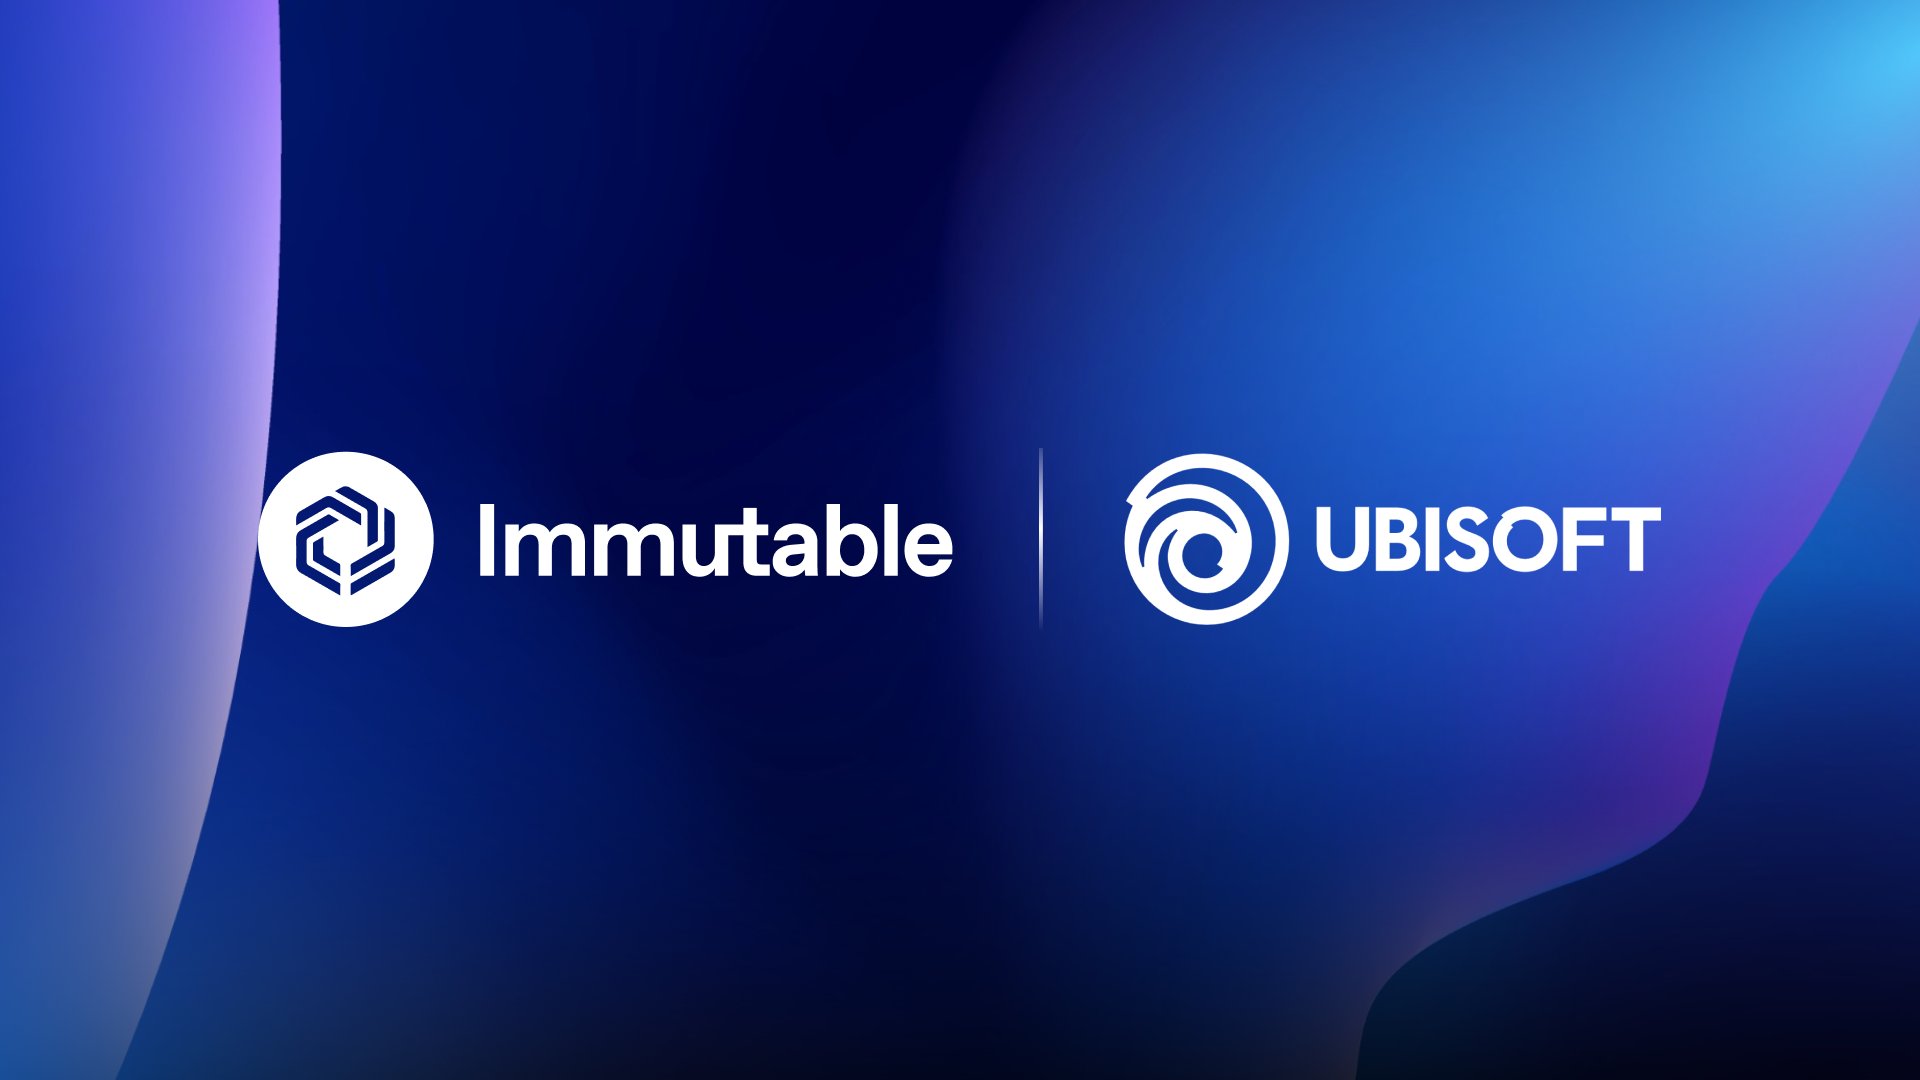 Ubisoft and Immutable strategic partnership announcement